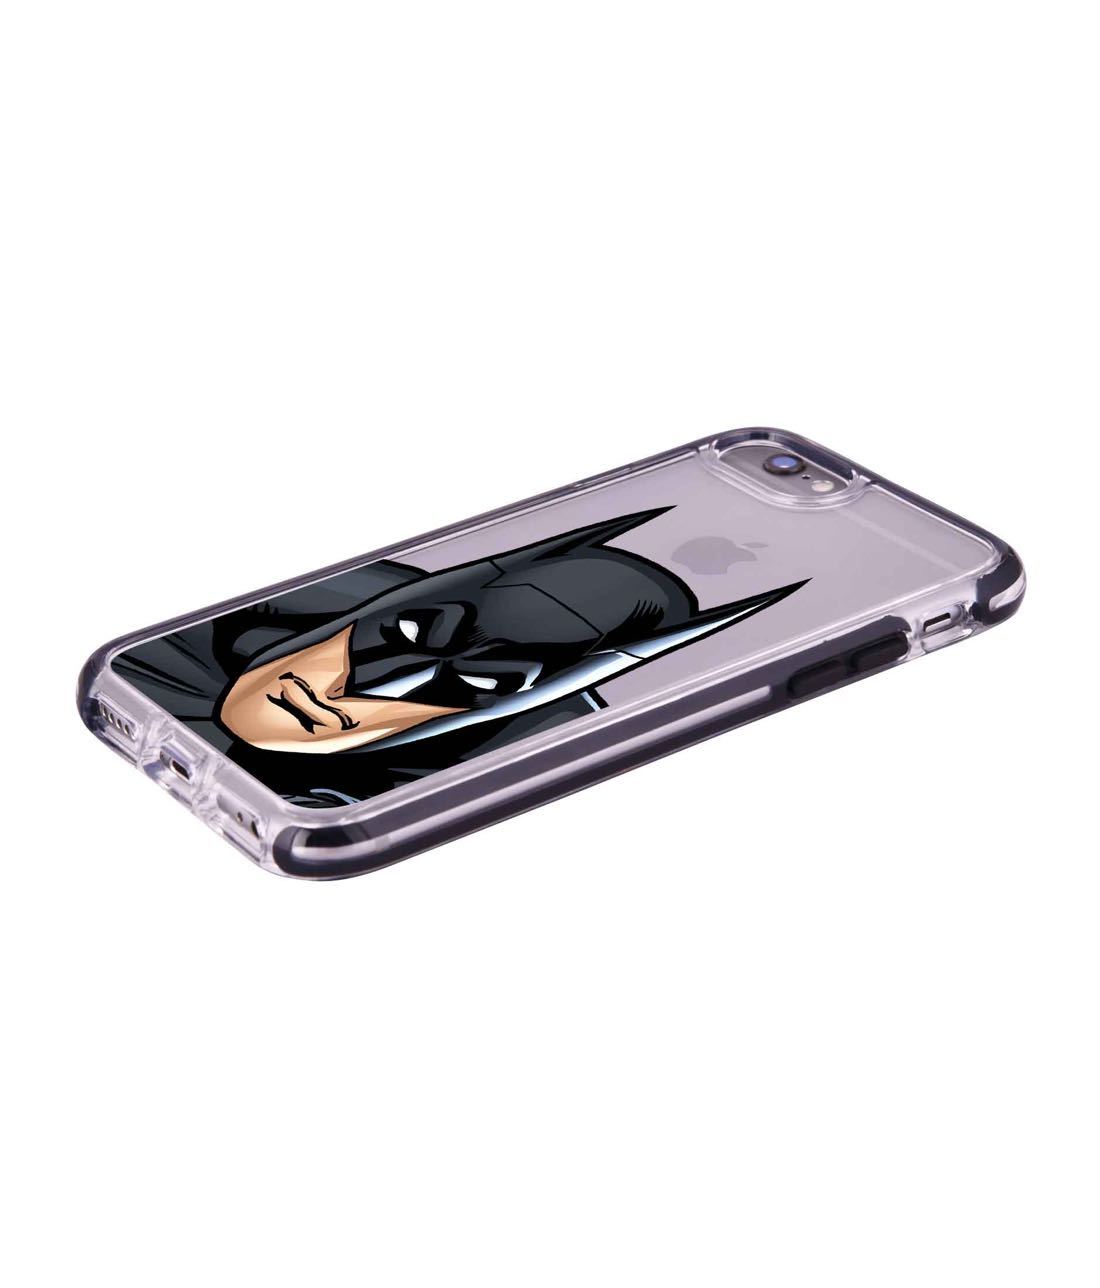 Fierce Batman - Extreme Phone Case for iPhone 6S